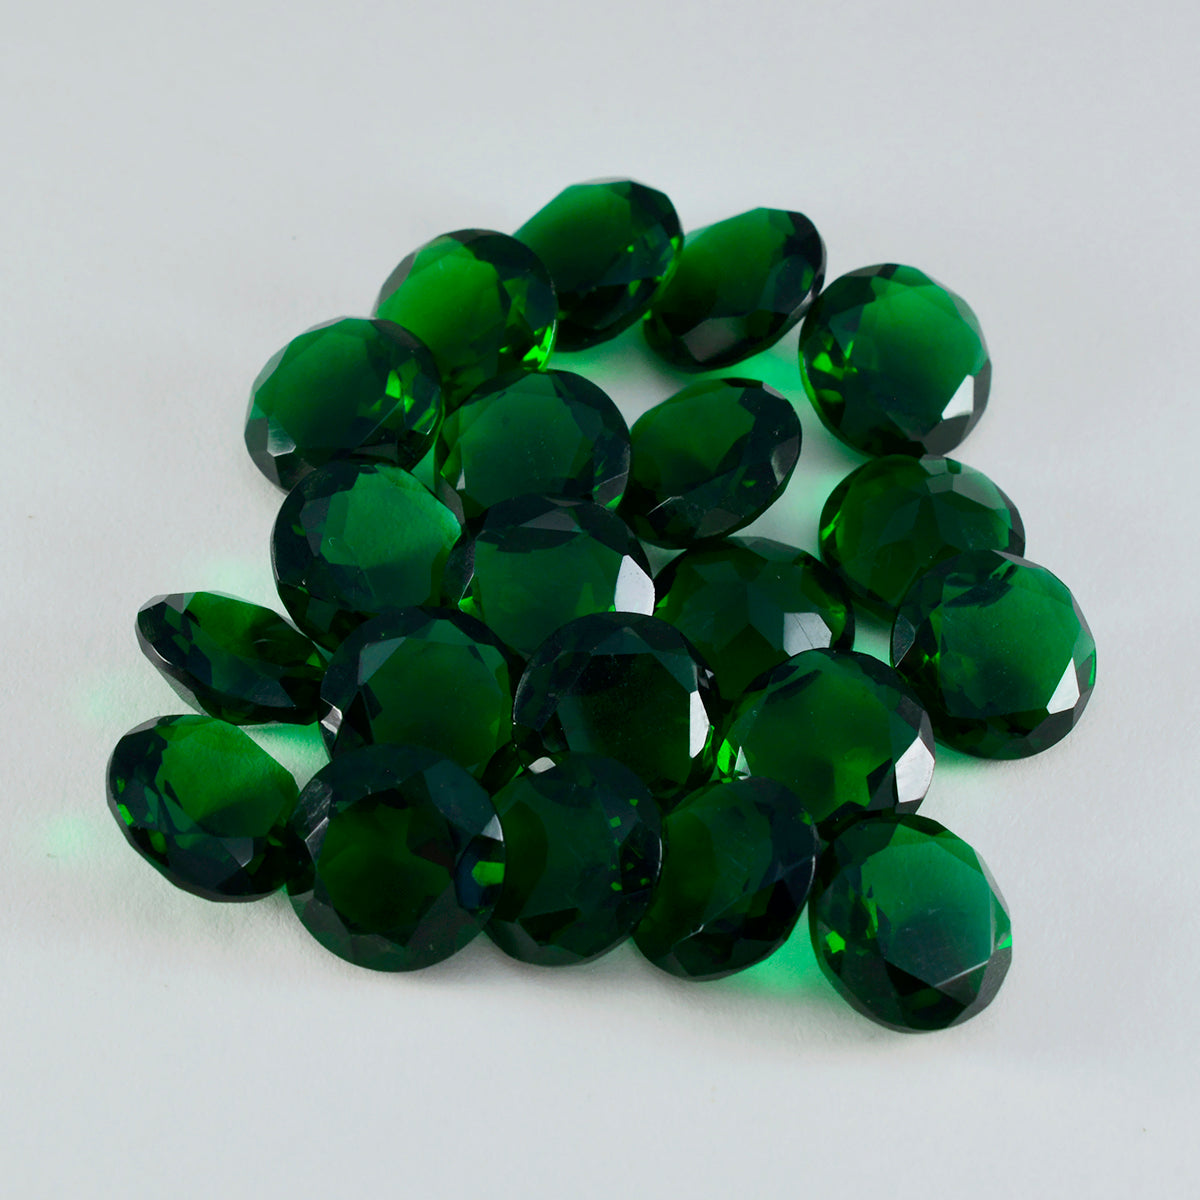 Riyogems 1PC Green Emerald CZ Faceted 9x9 mm Round Shape A+ Quality Loose Gems